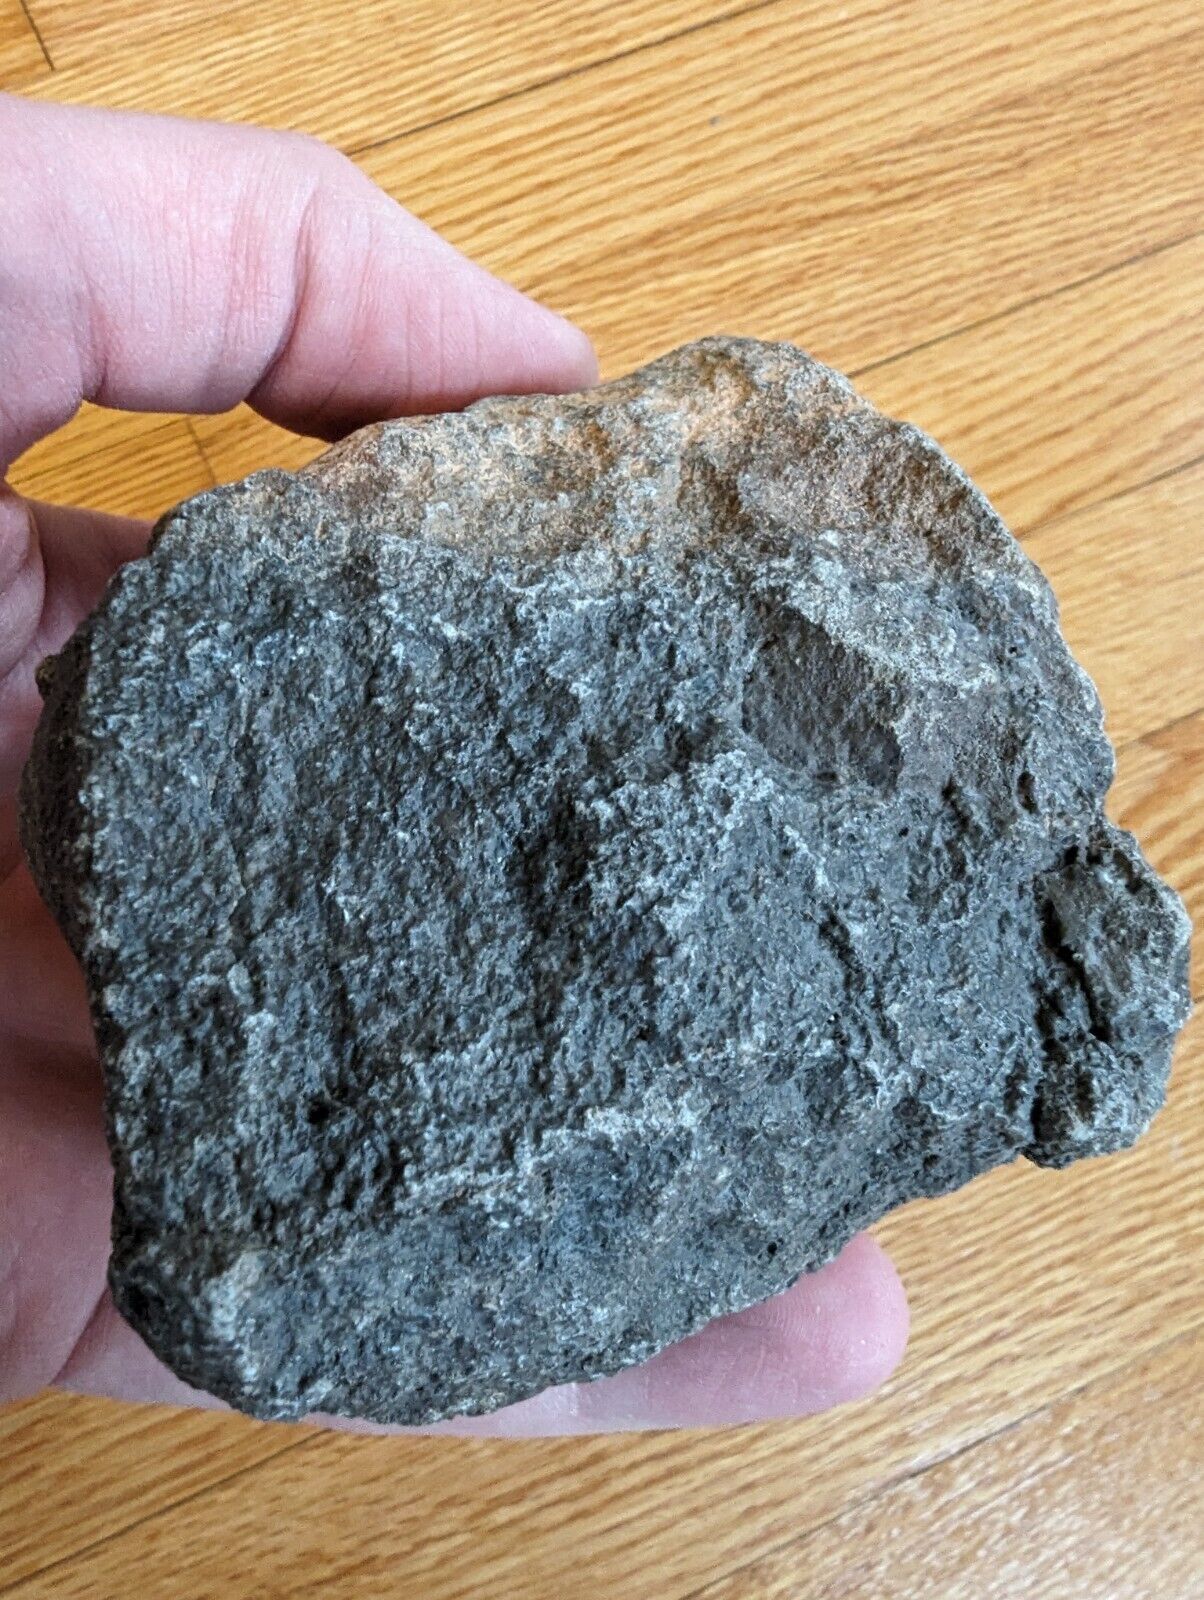 Jikharra 001 Eucrite Melt Breccia Meteorite - Asteroid Vesta - 717g 